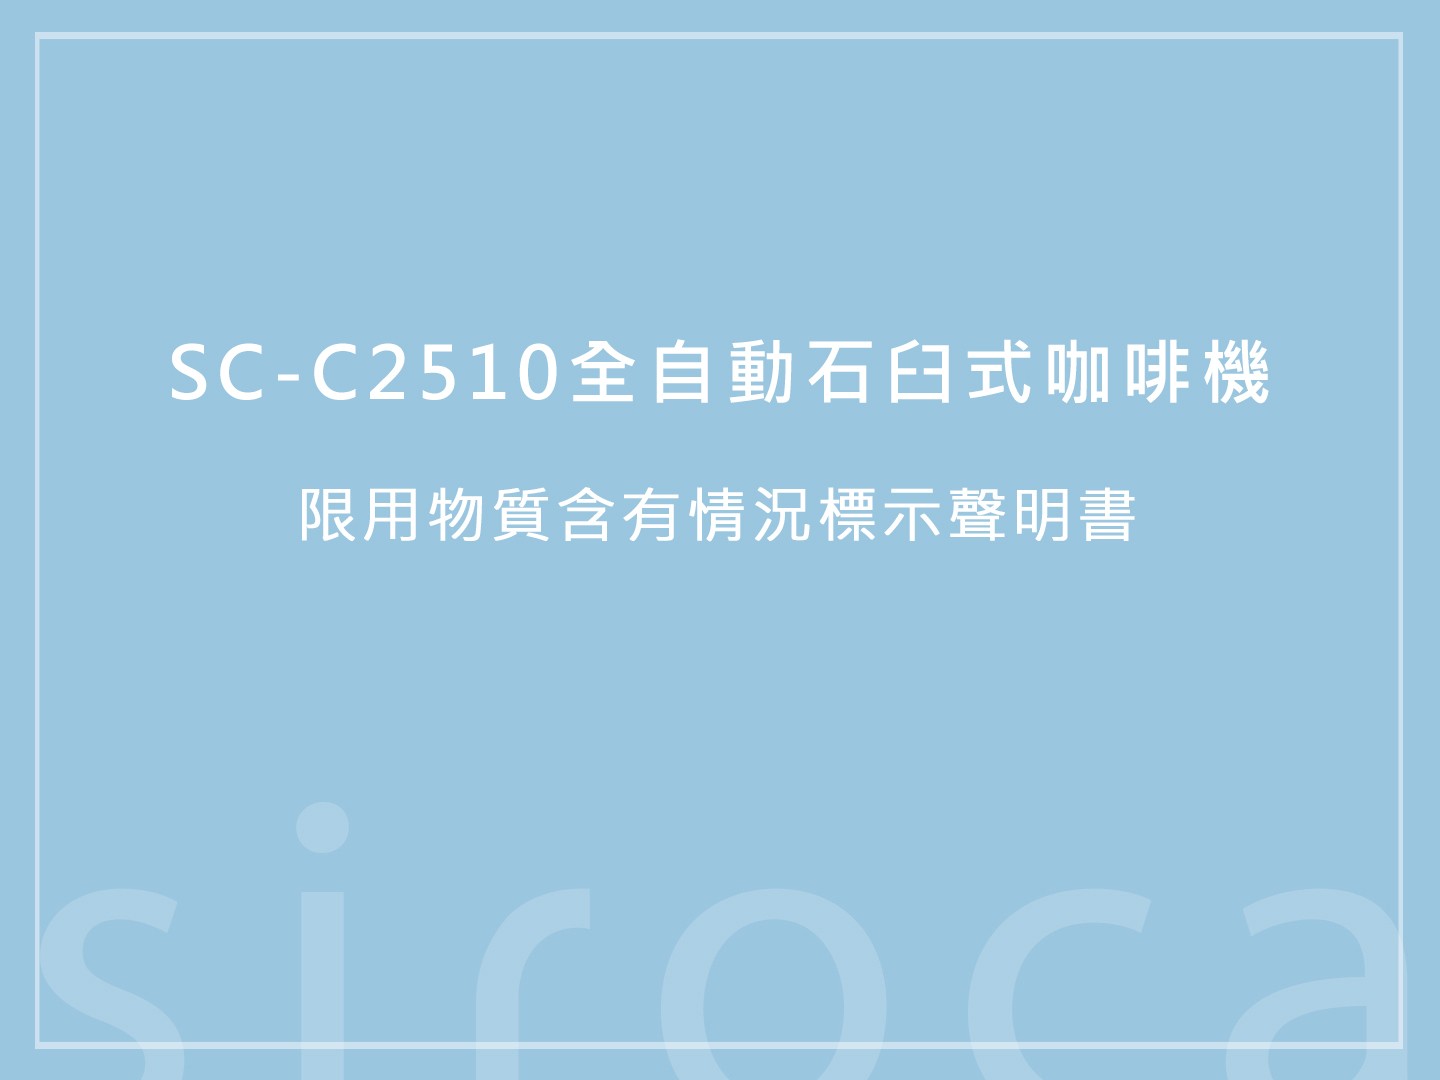 SC-C2510 石臼式全自動研磨咖啡機 限用物質含有情況標示